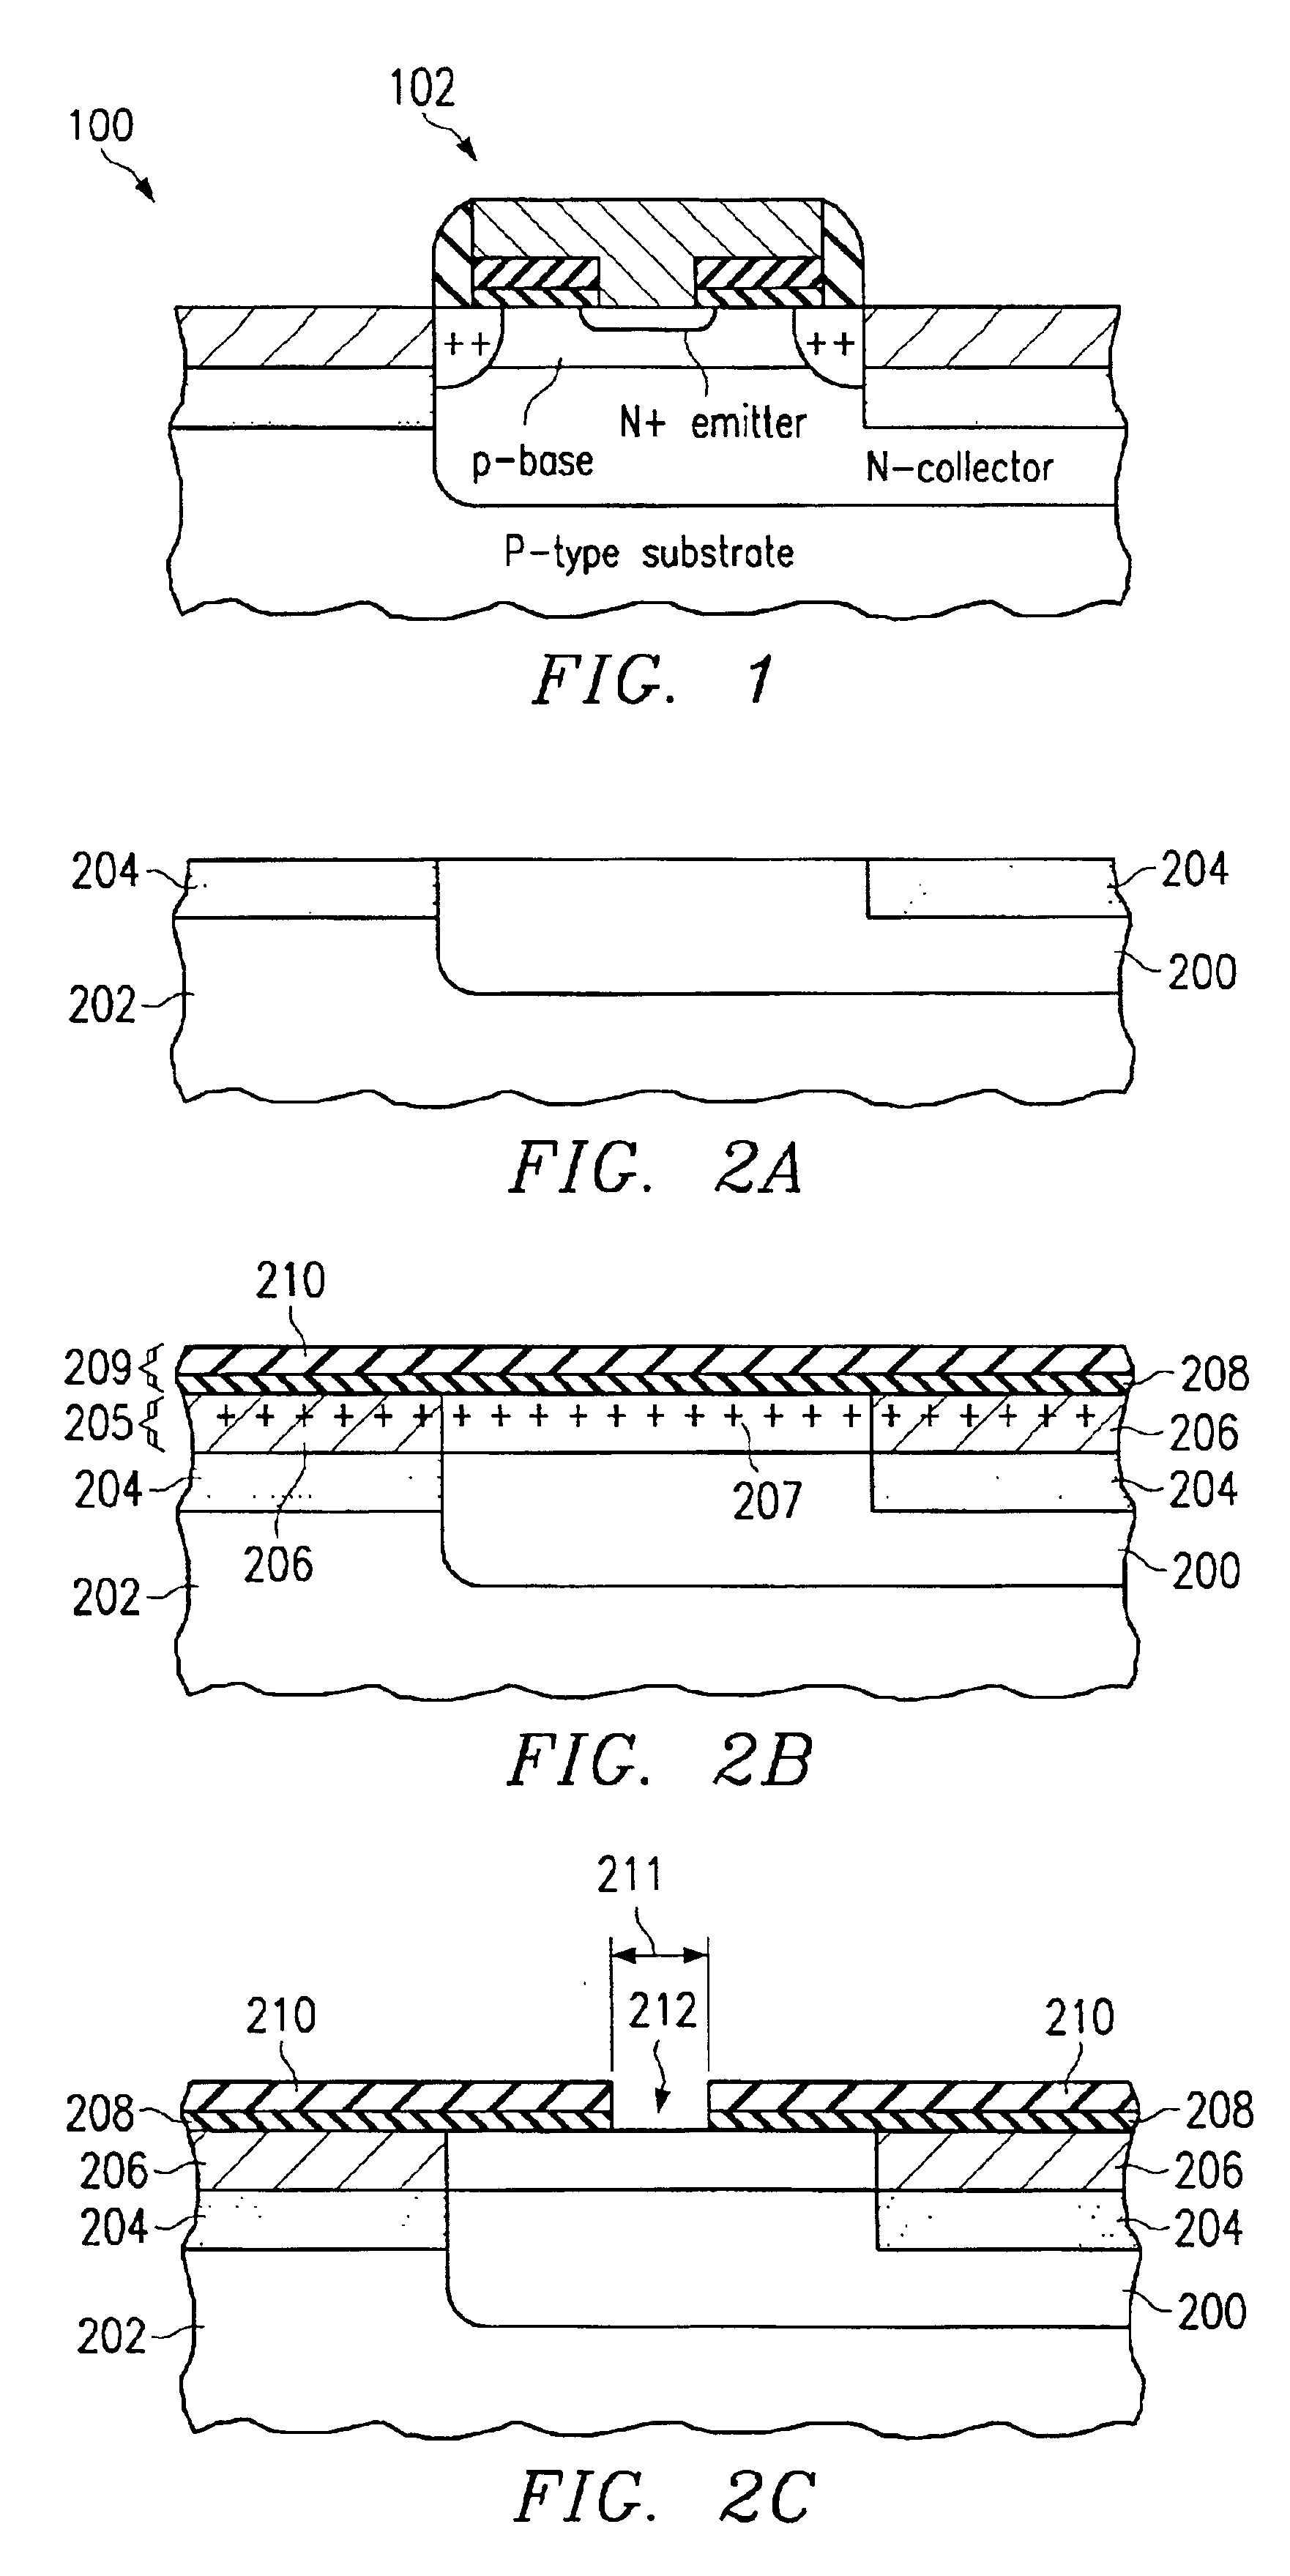 Method for manufacturing a bipolar junction transistor